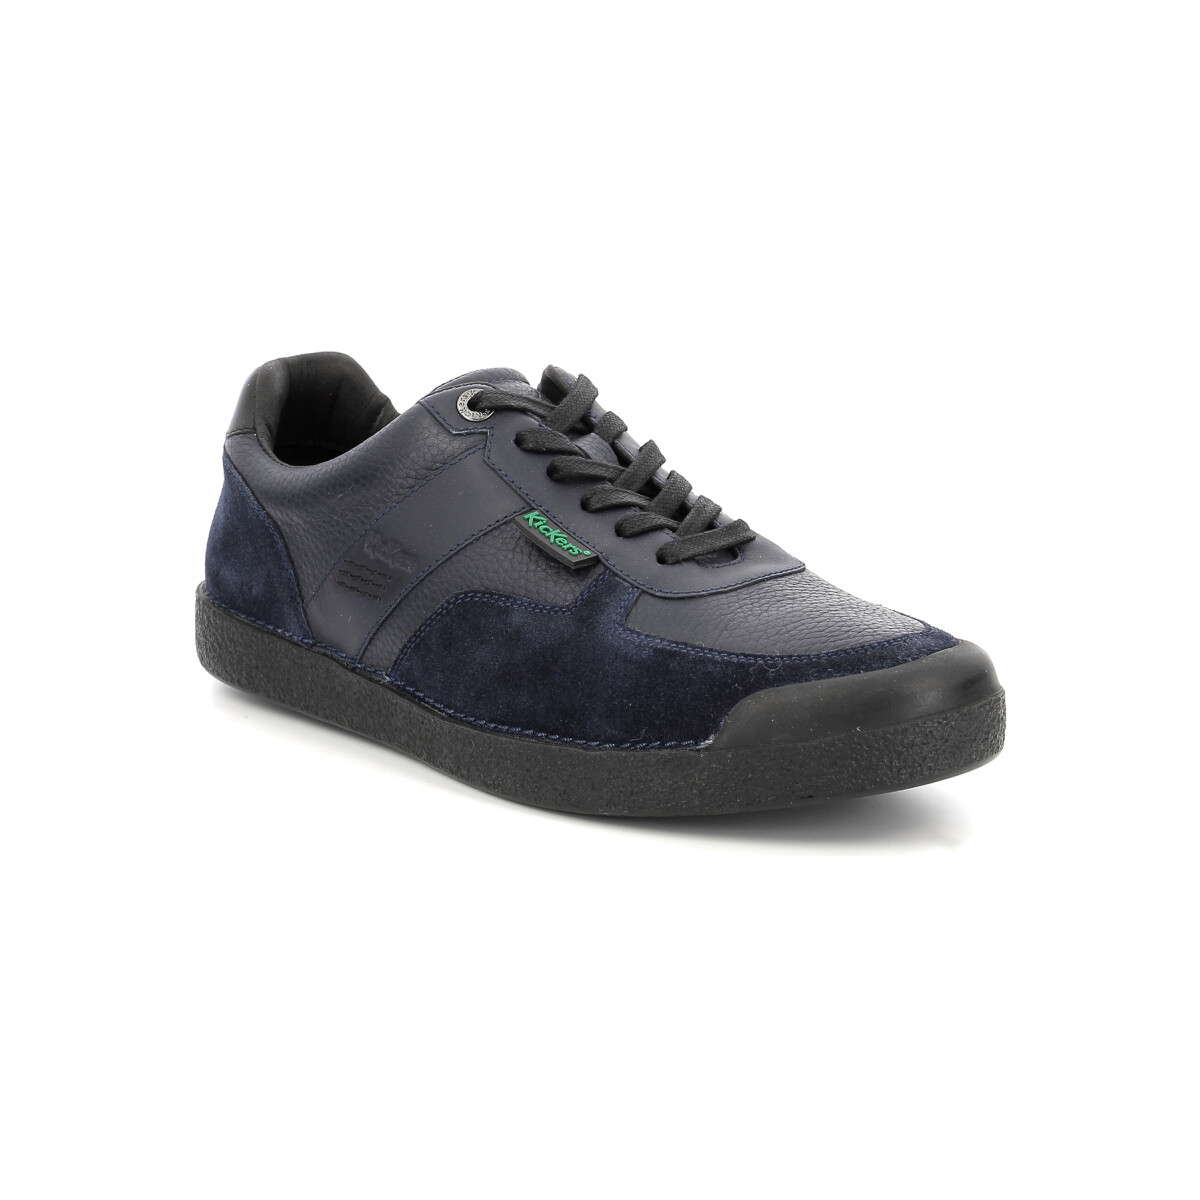 Schuhe Herren Sneaker Low Kickers Kick Trino Blau